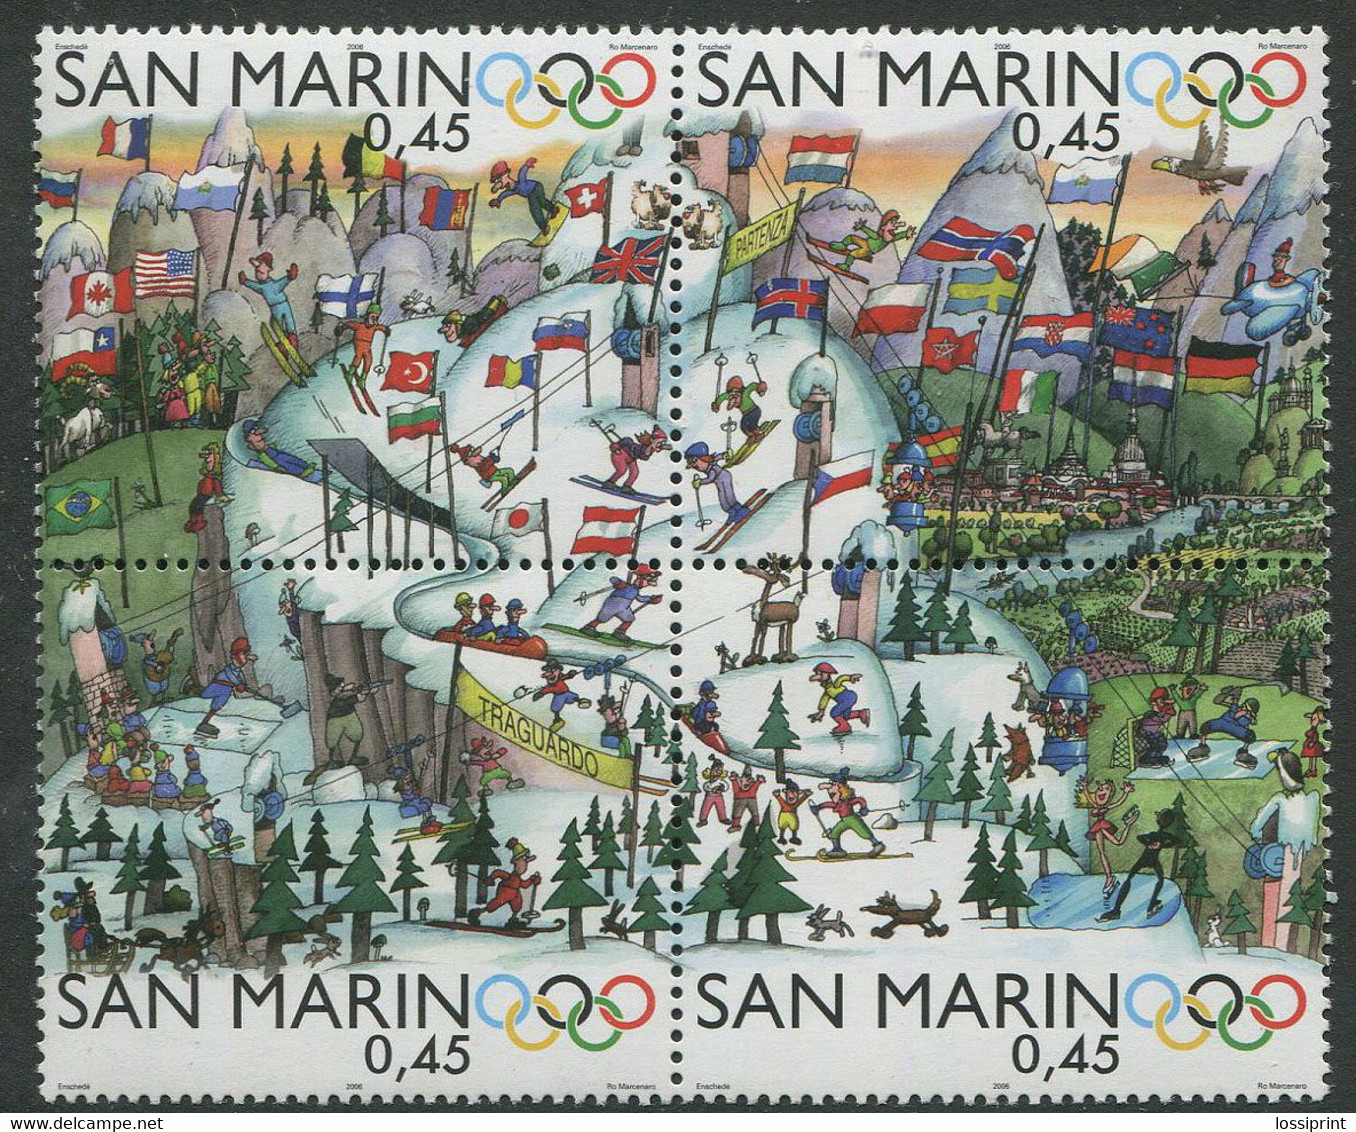 San Marino:Unused Stamps Serie Torino Olympic Games 2006, MNH - Winter 2006: Torino